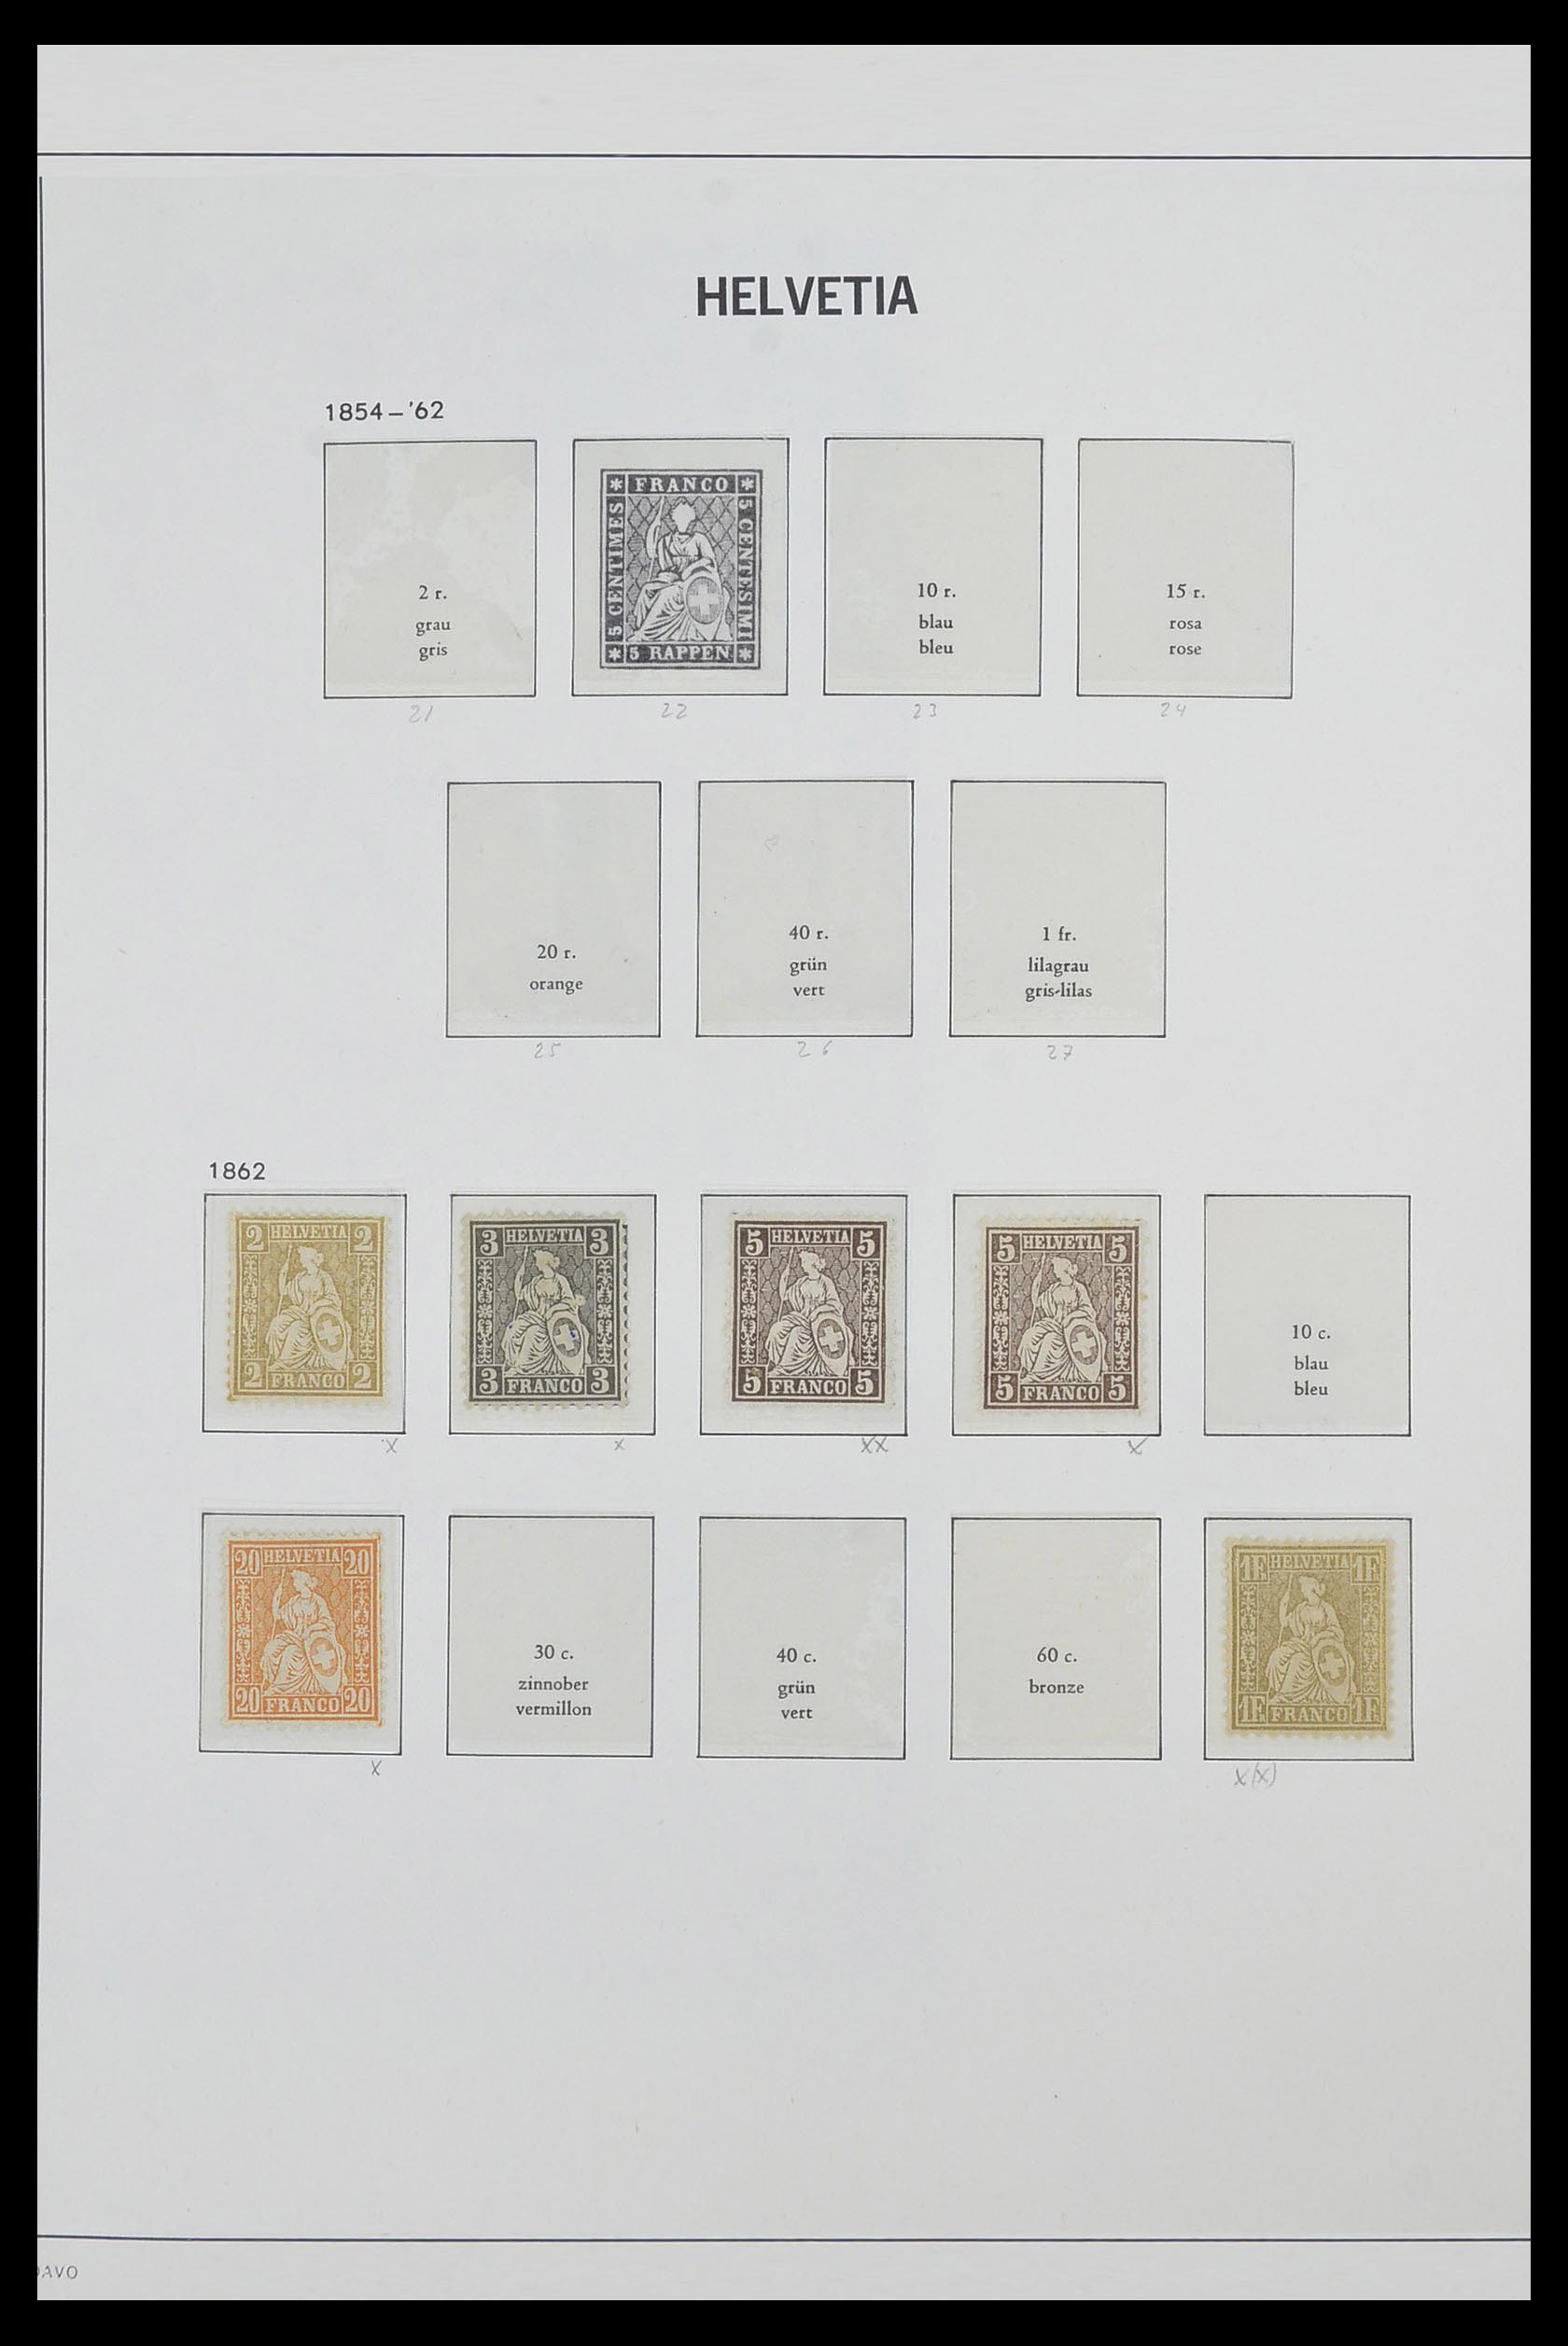 33556 001 - Stamp collection 33556 Switzerland 1862-2000.